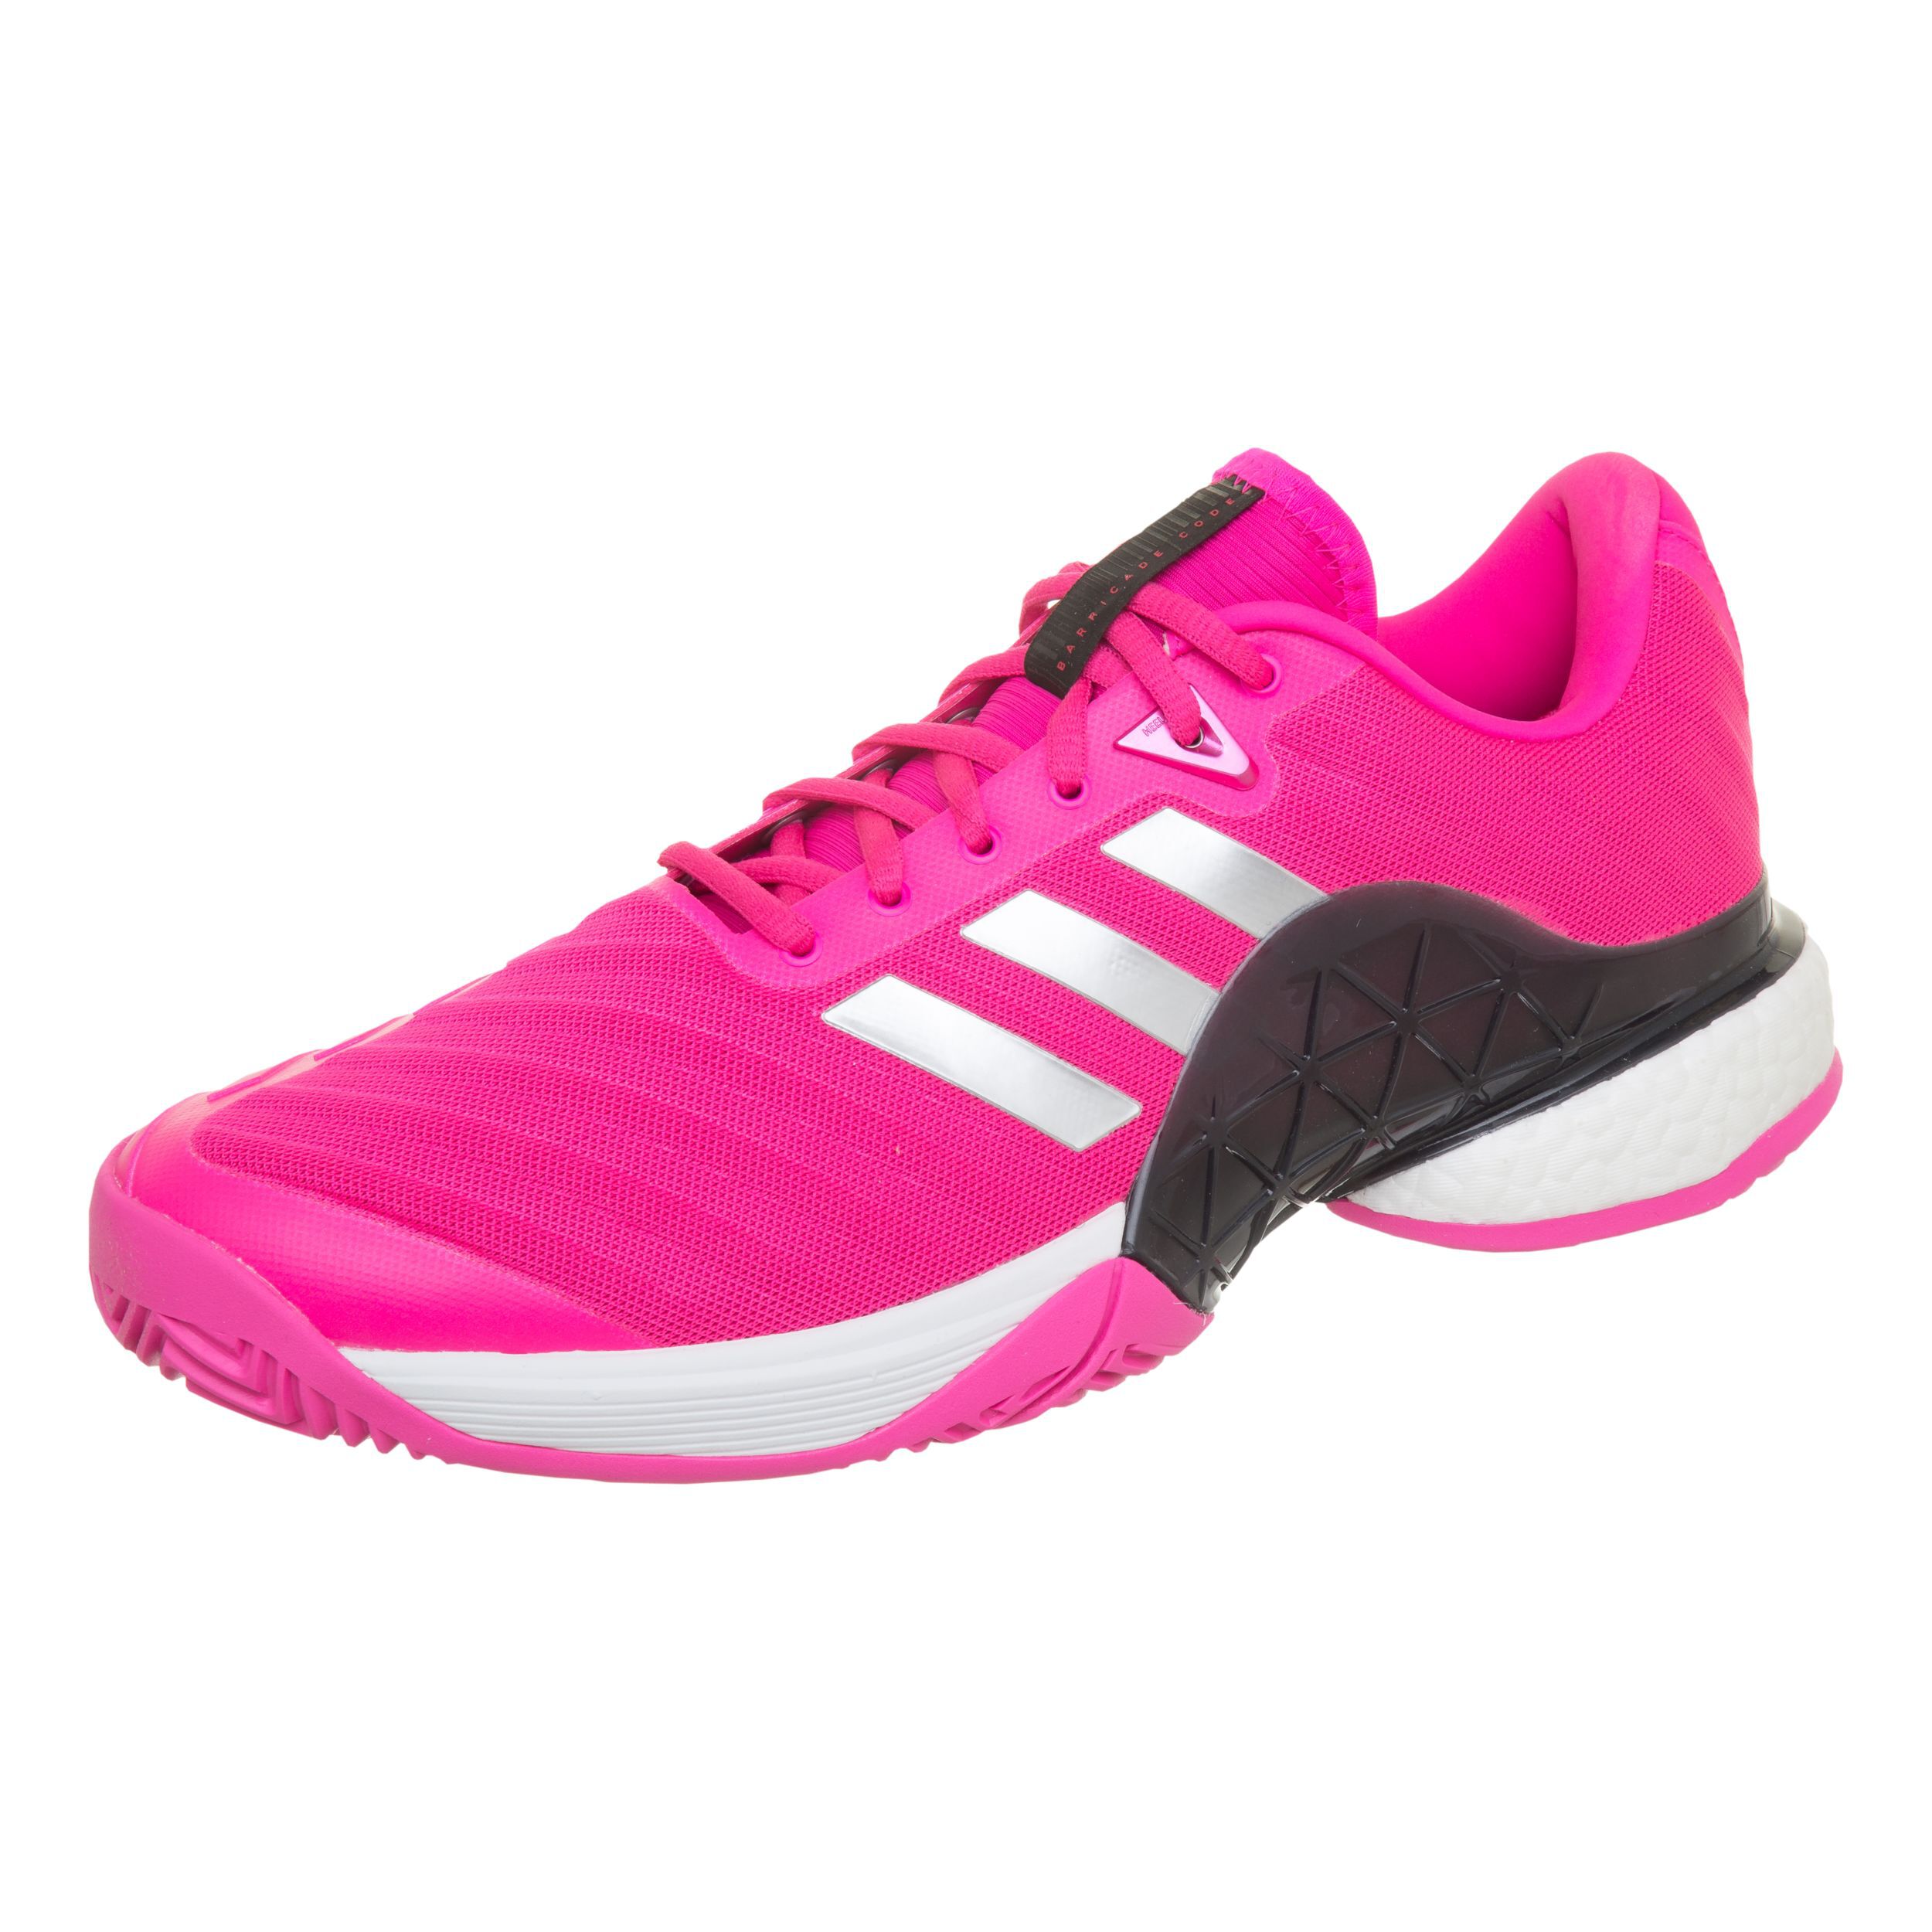 adidas tennis shoes pink